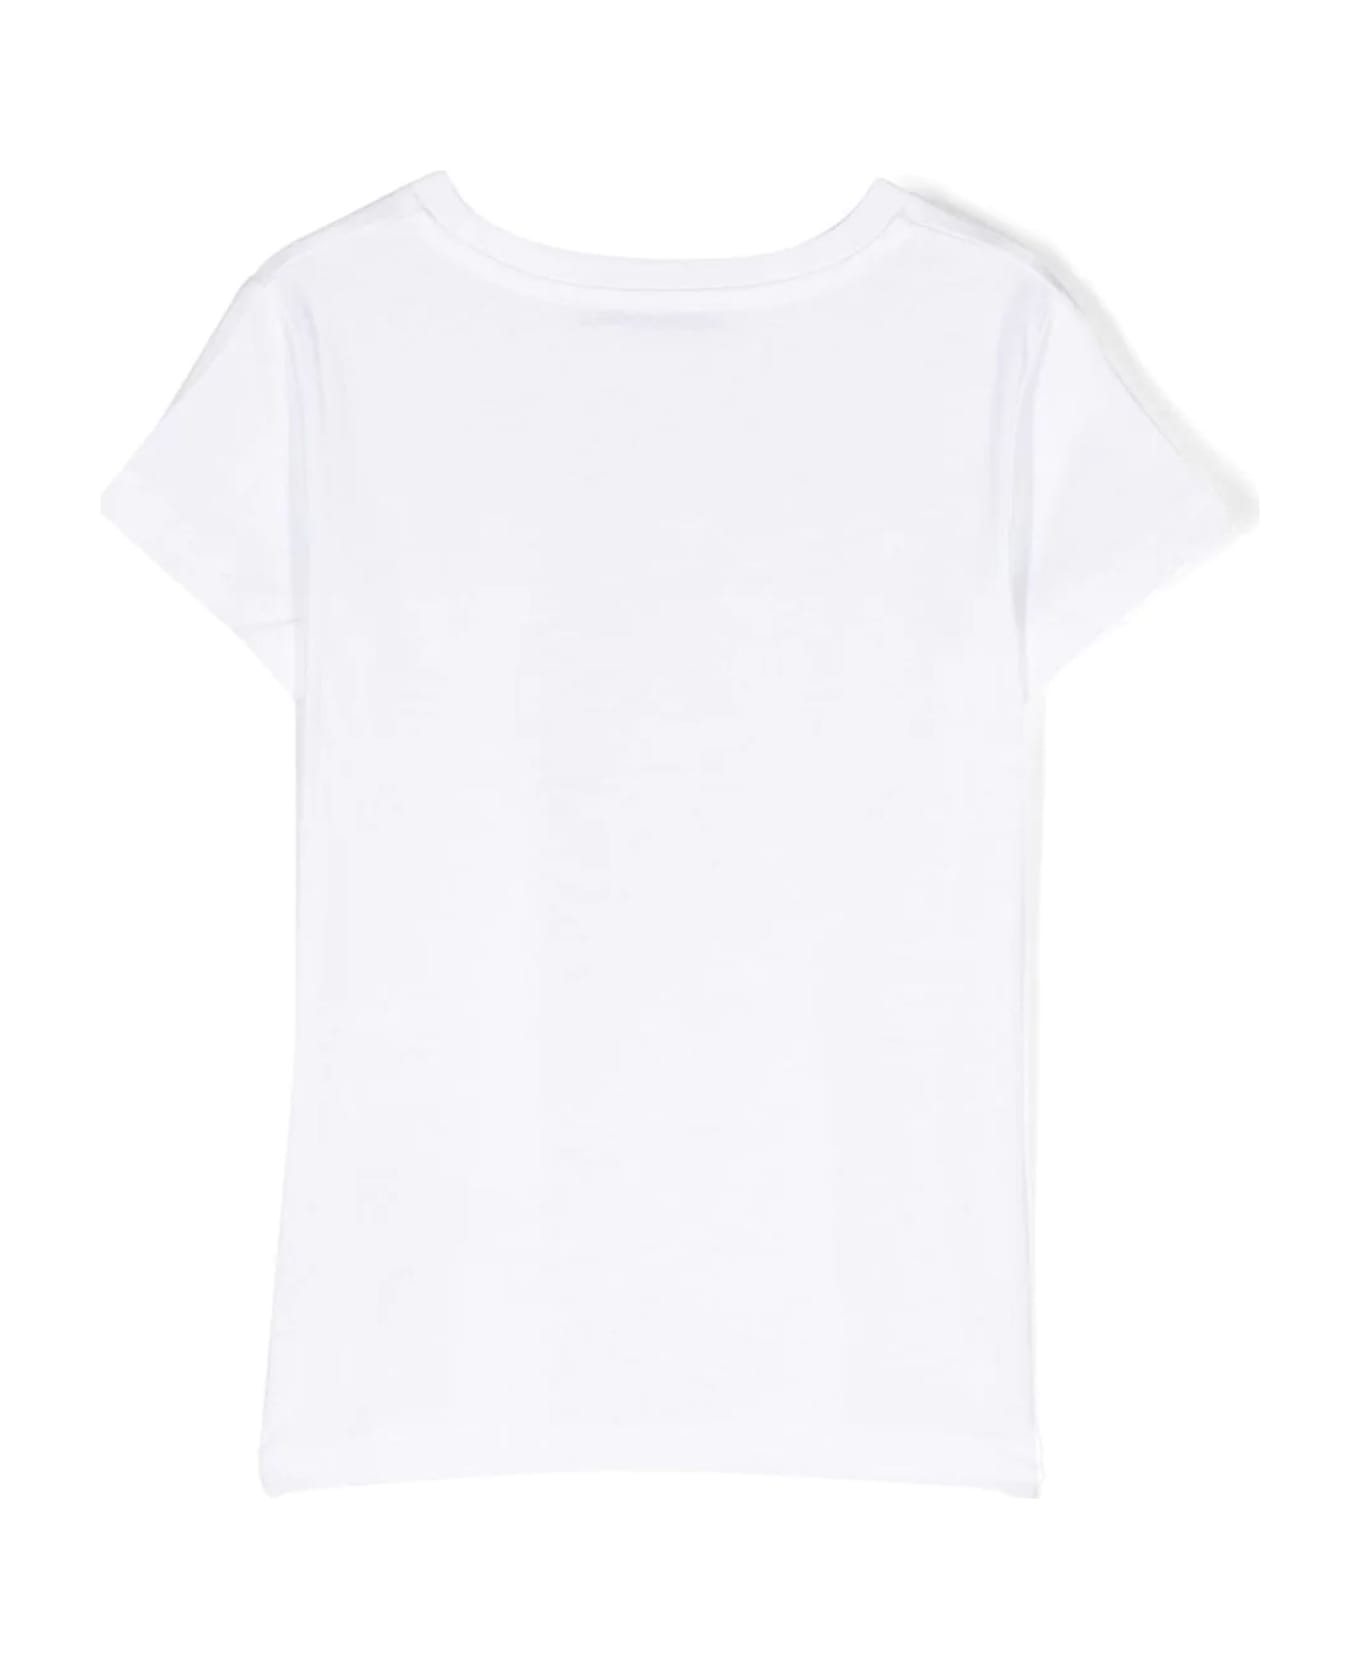 Pucci White Cotton Tshirt - Bianco